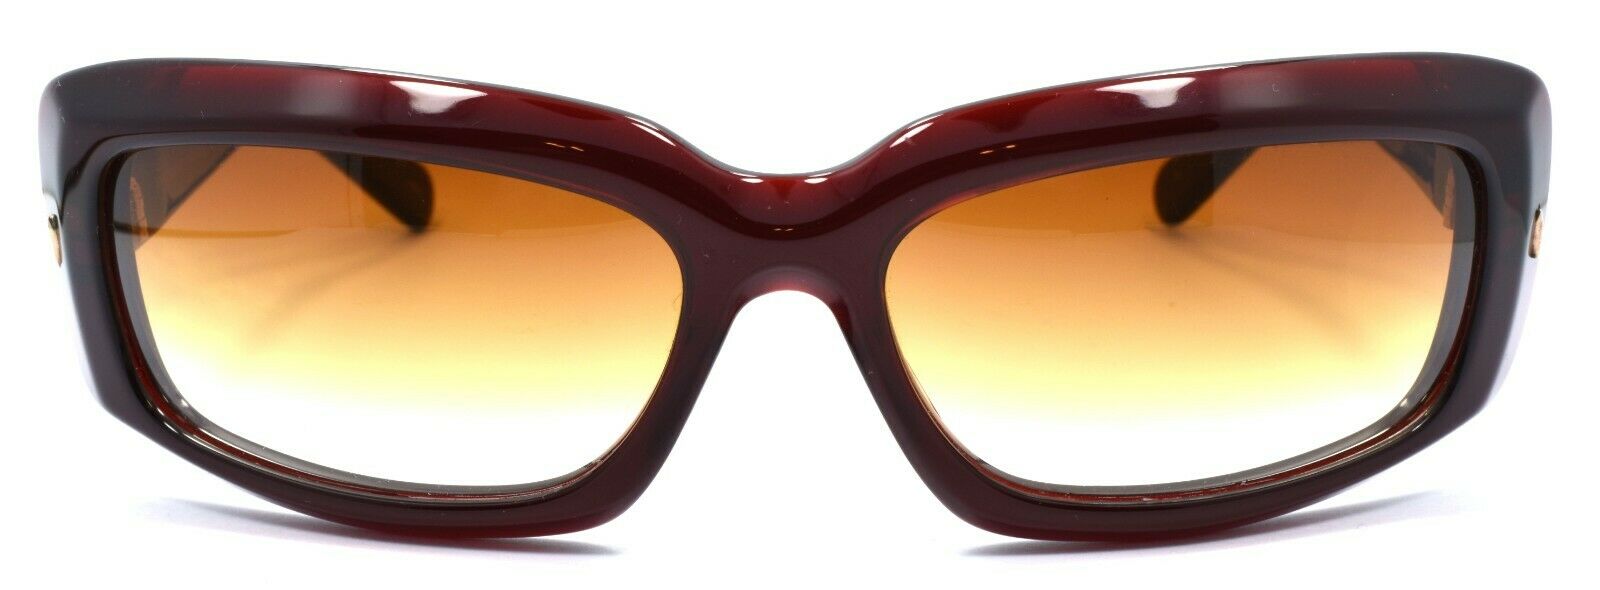 2-Oliver Peoples Ingenue SI Women's Sunglasses Burgundy / Brown Gradient JAPAN &-Does not apply-IKSpecs